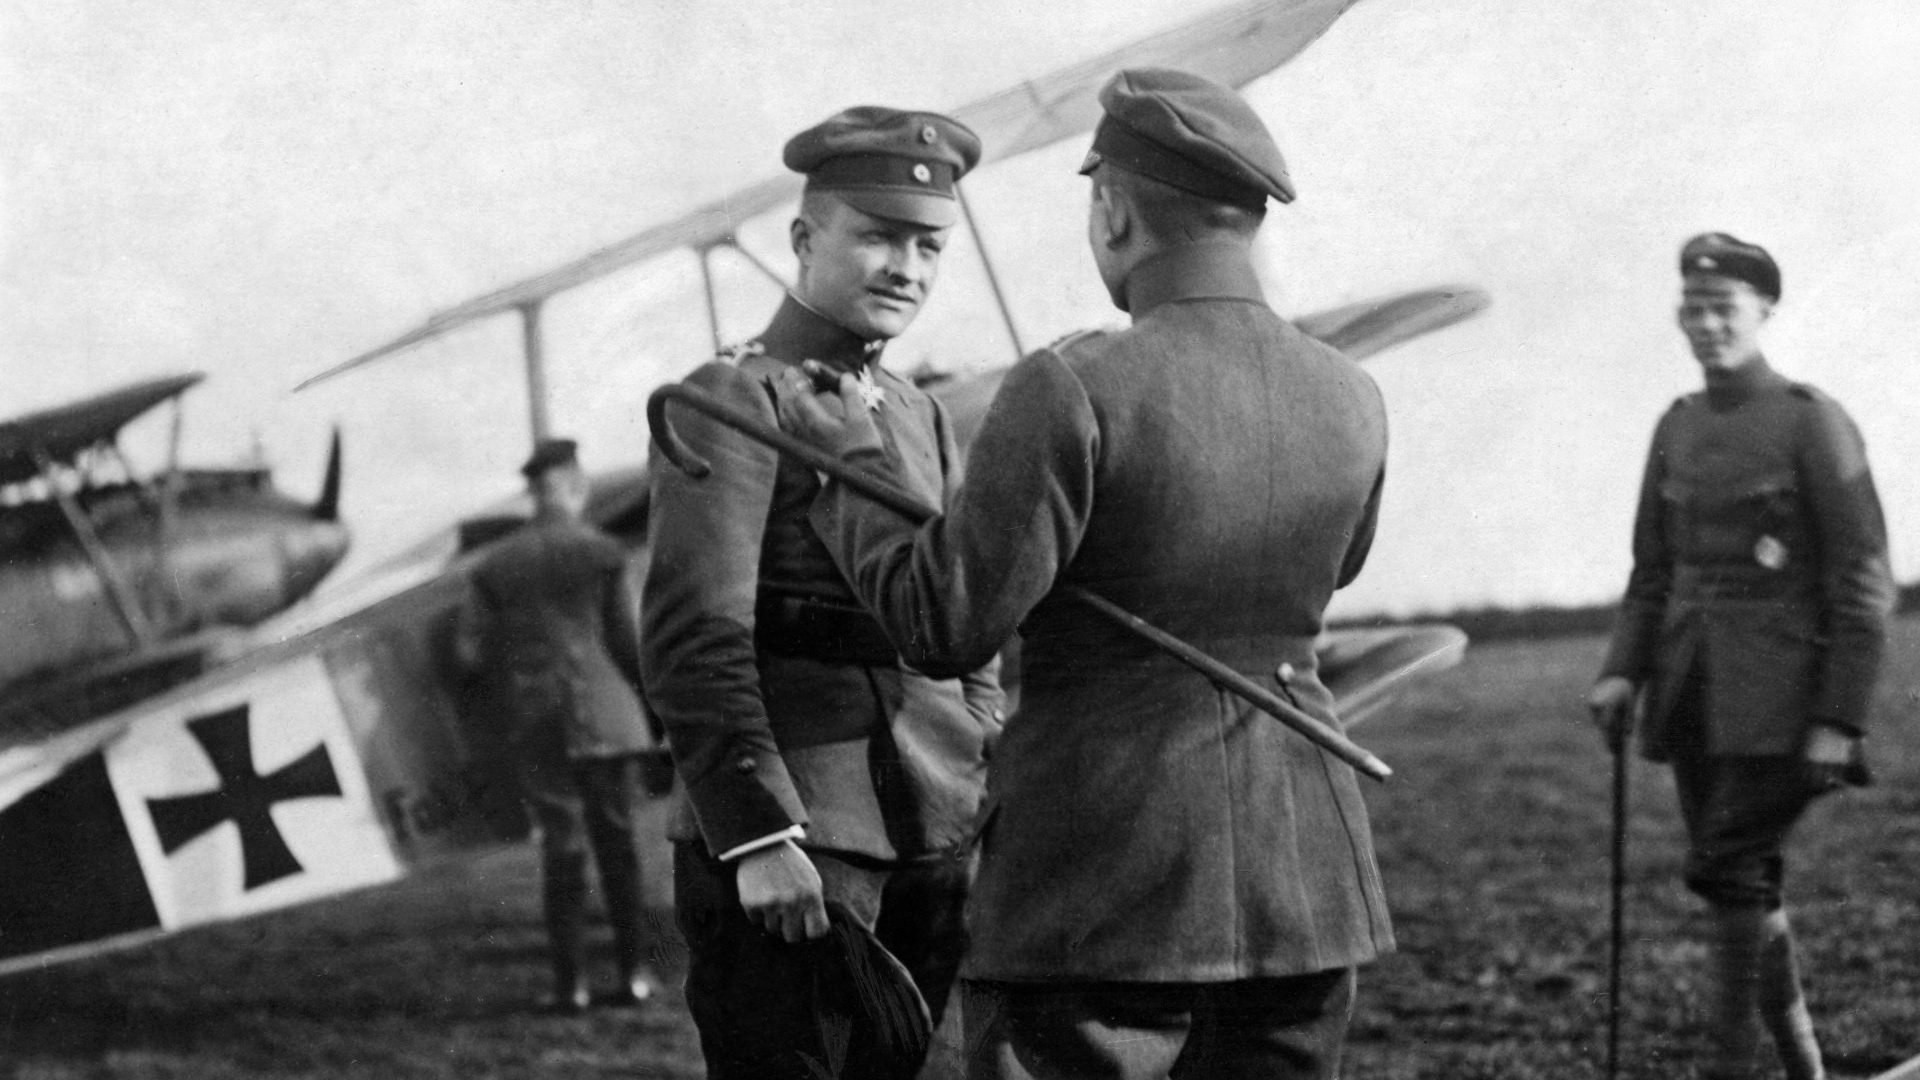 gips Elegance lærer Manfred von Richthofen: A gentleman warrior of the skies or a ruthless  killer? - The New European